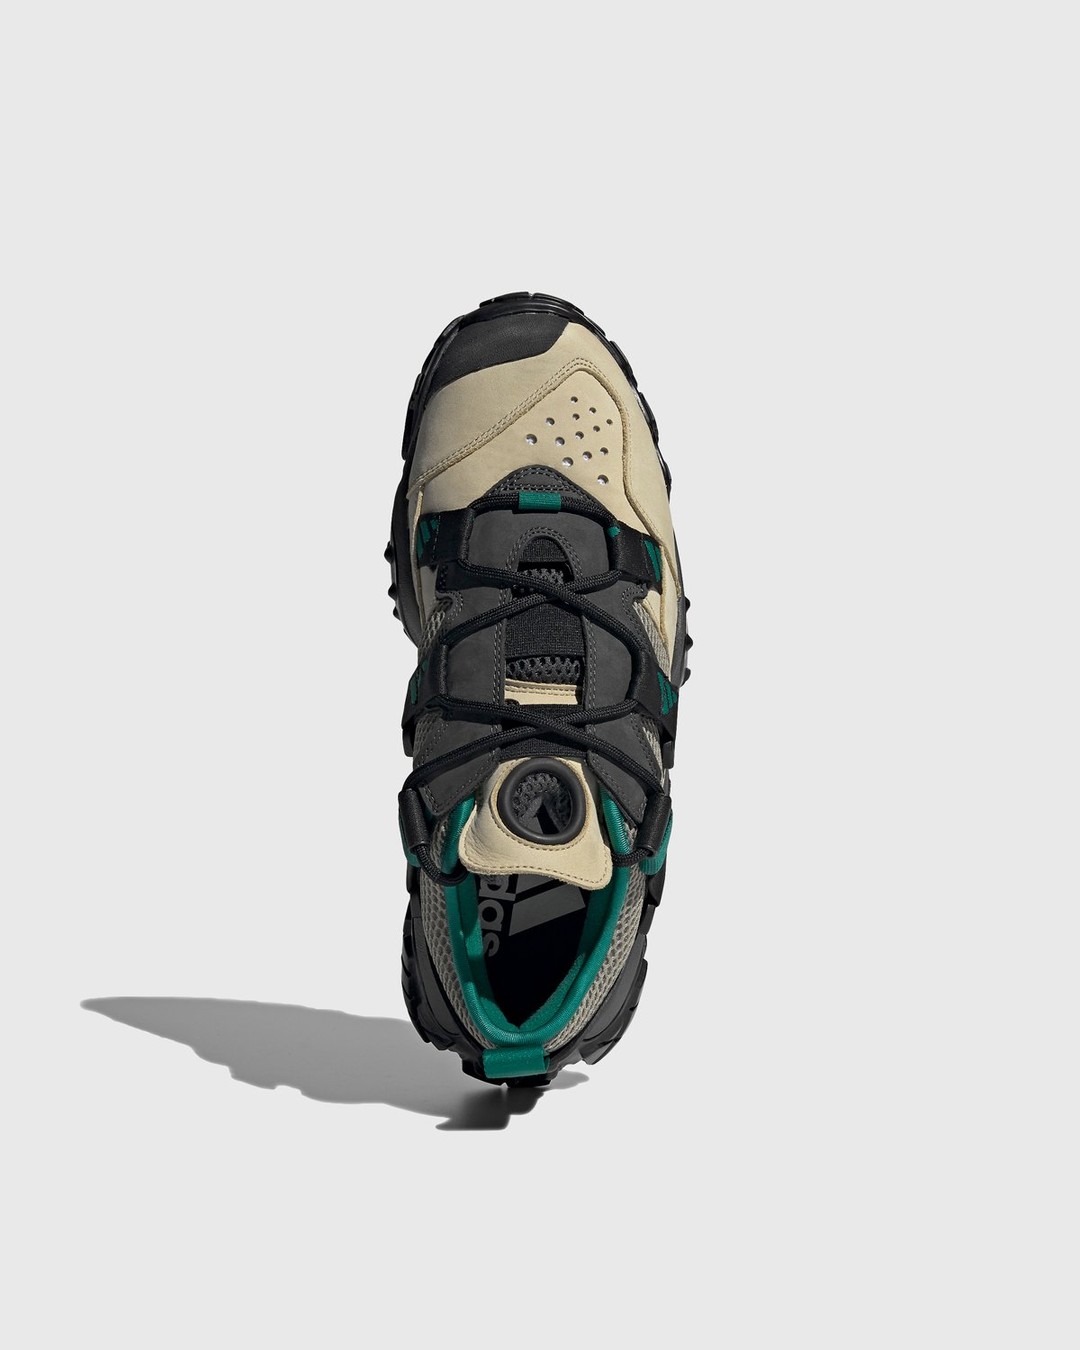 Adidas – FYW XTA Sand/Black/Green - Low Top Sneakers - Multi - Image 3